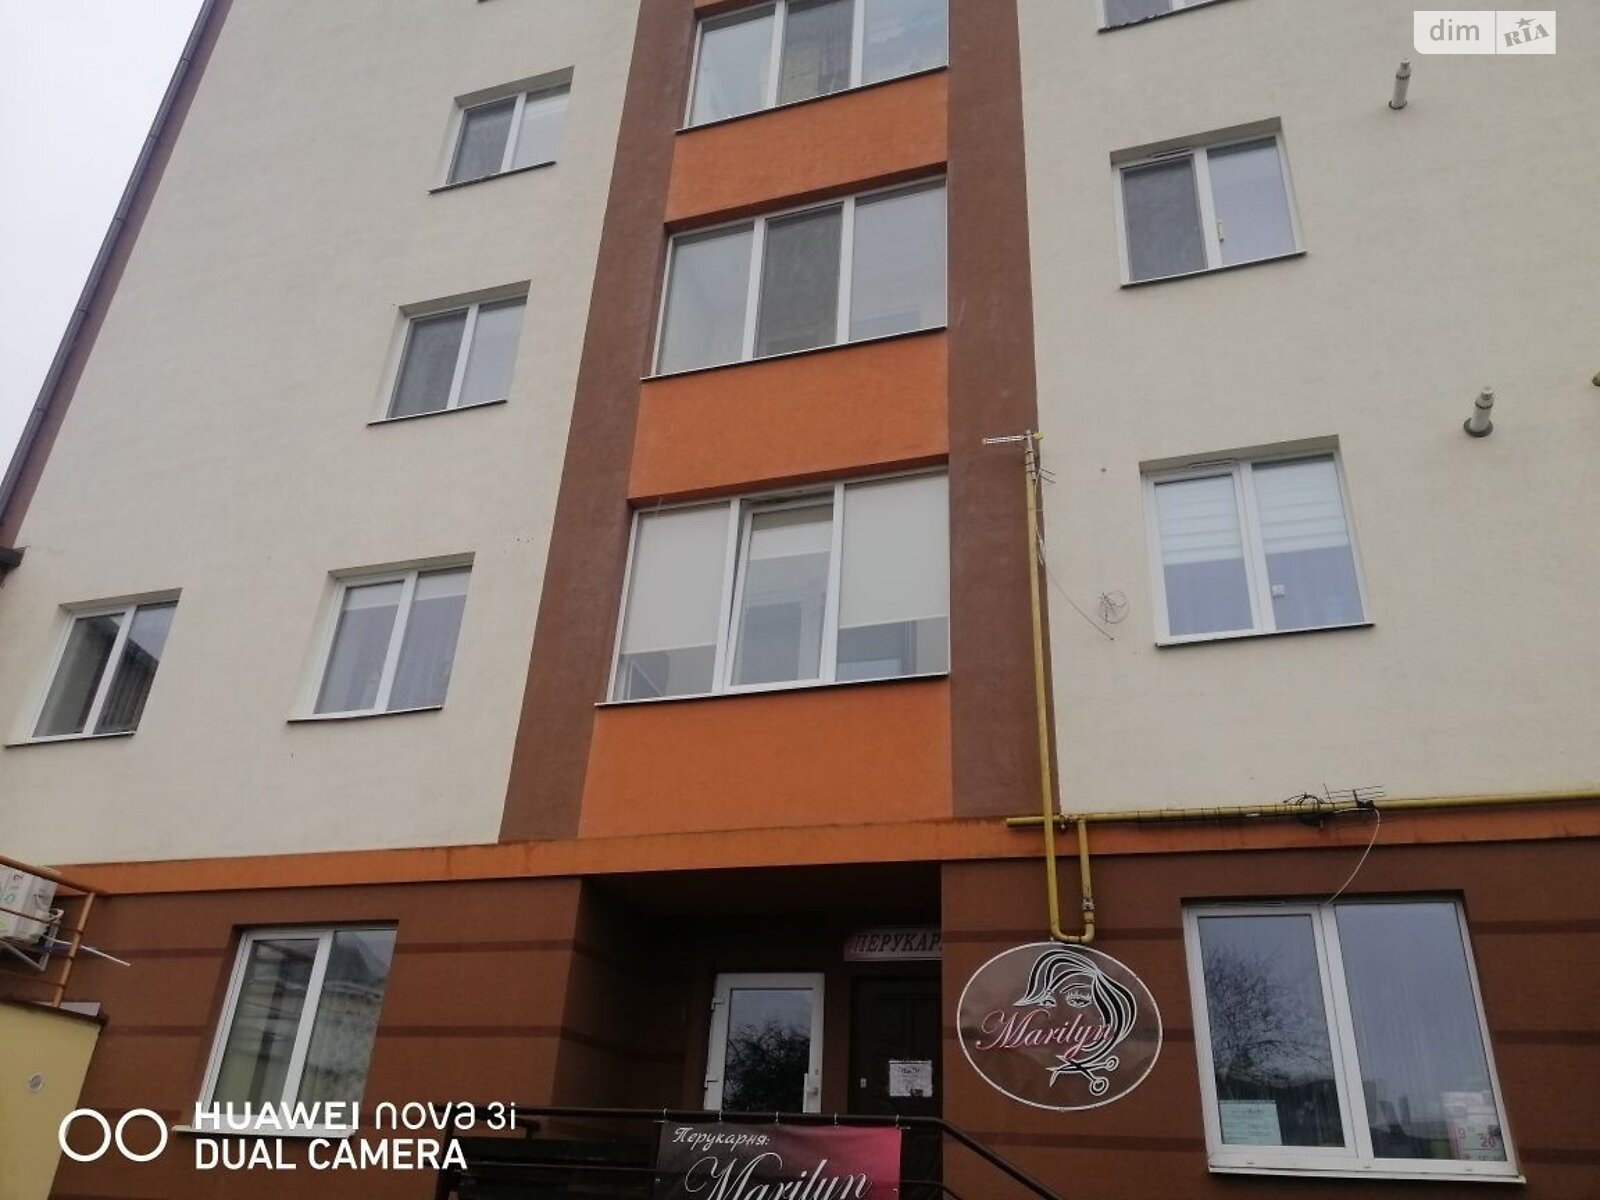 Продажа трехкомнатной квартиры в Ровно, на ул. Дворецкая, район Пивзавод фото 1